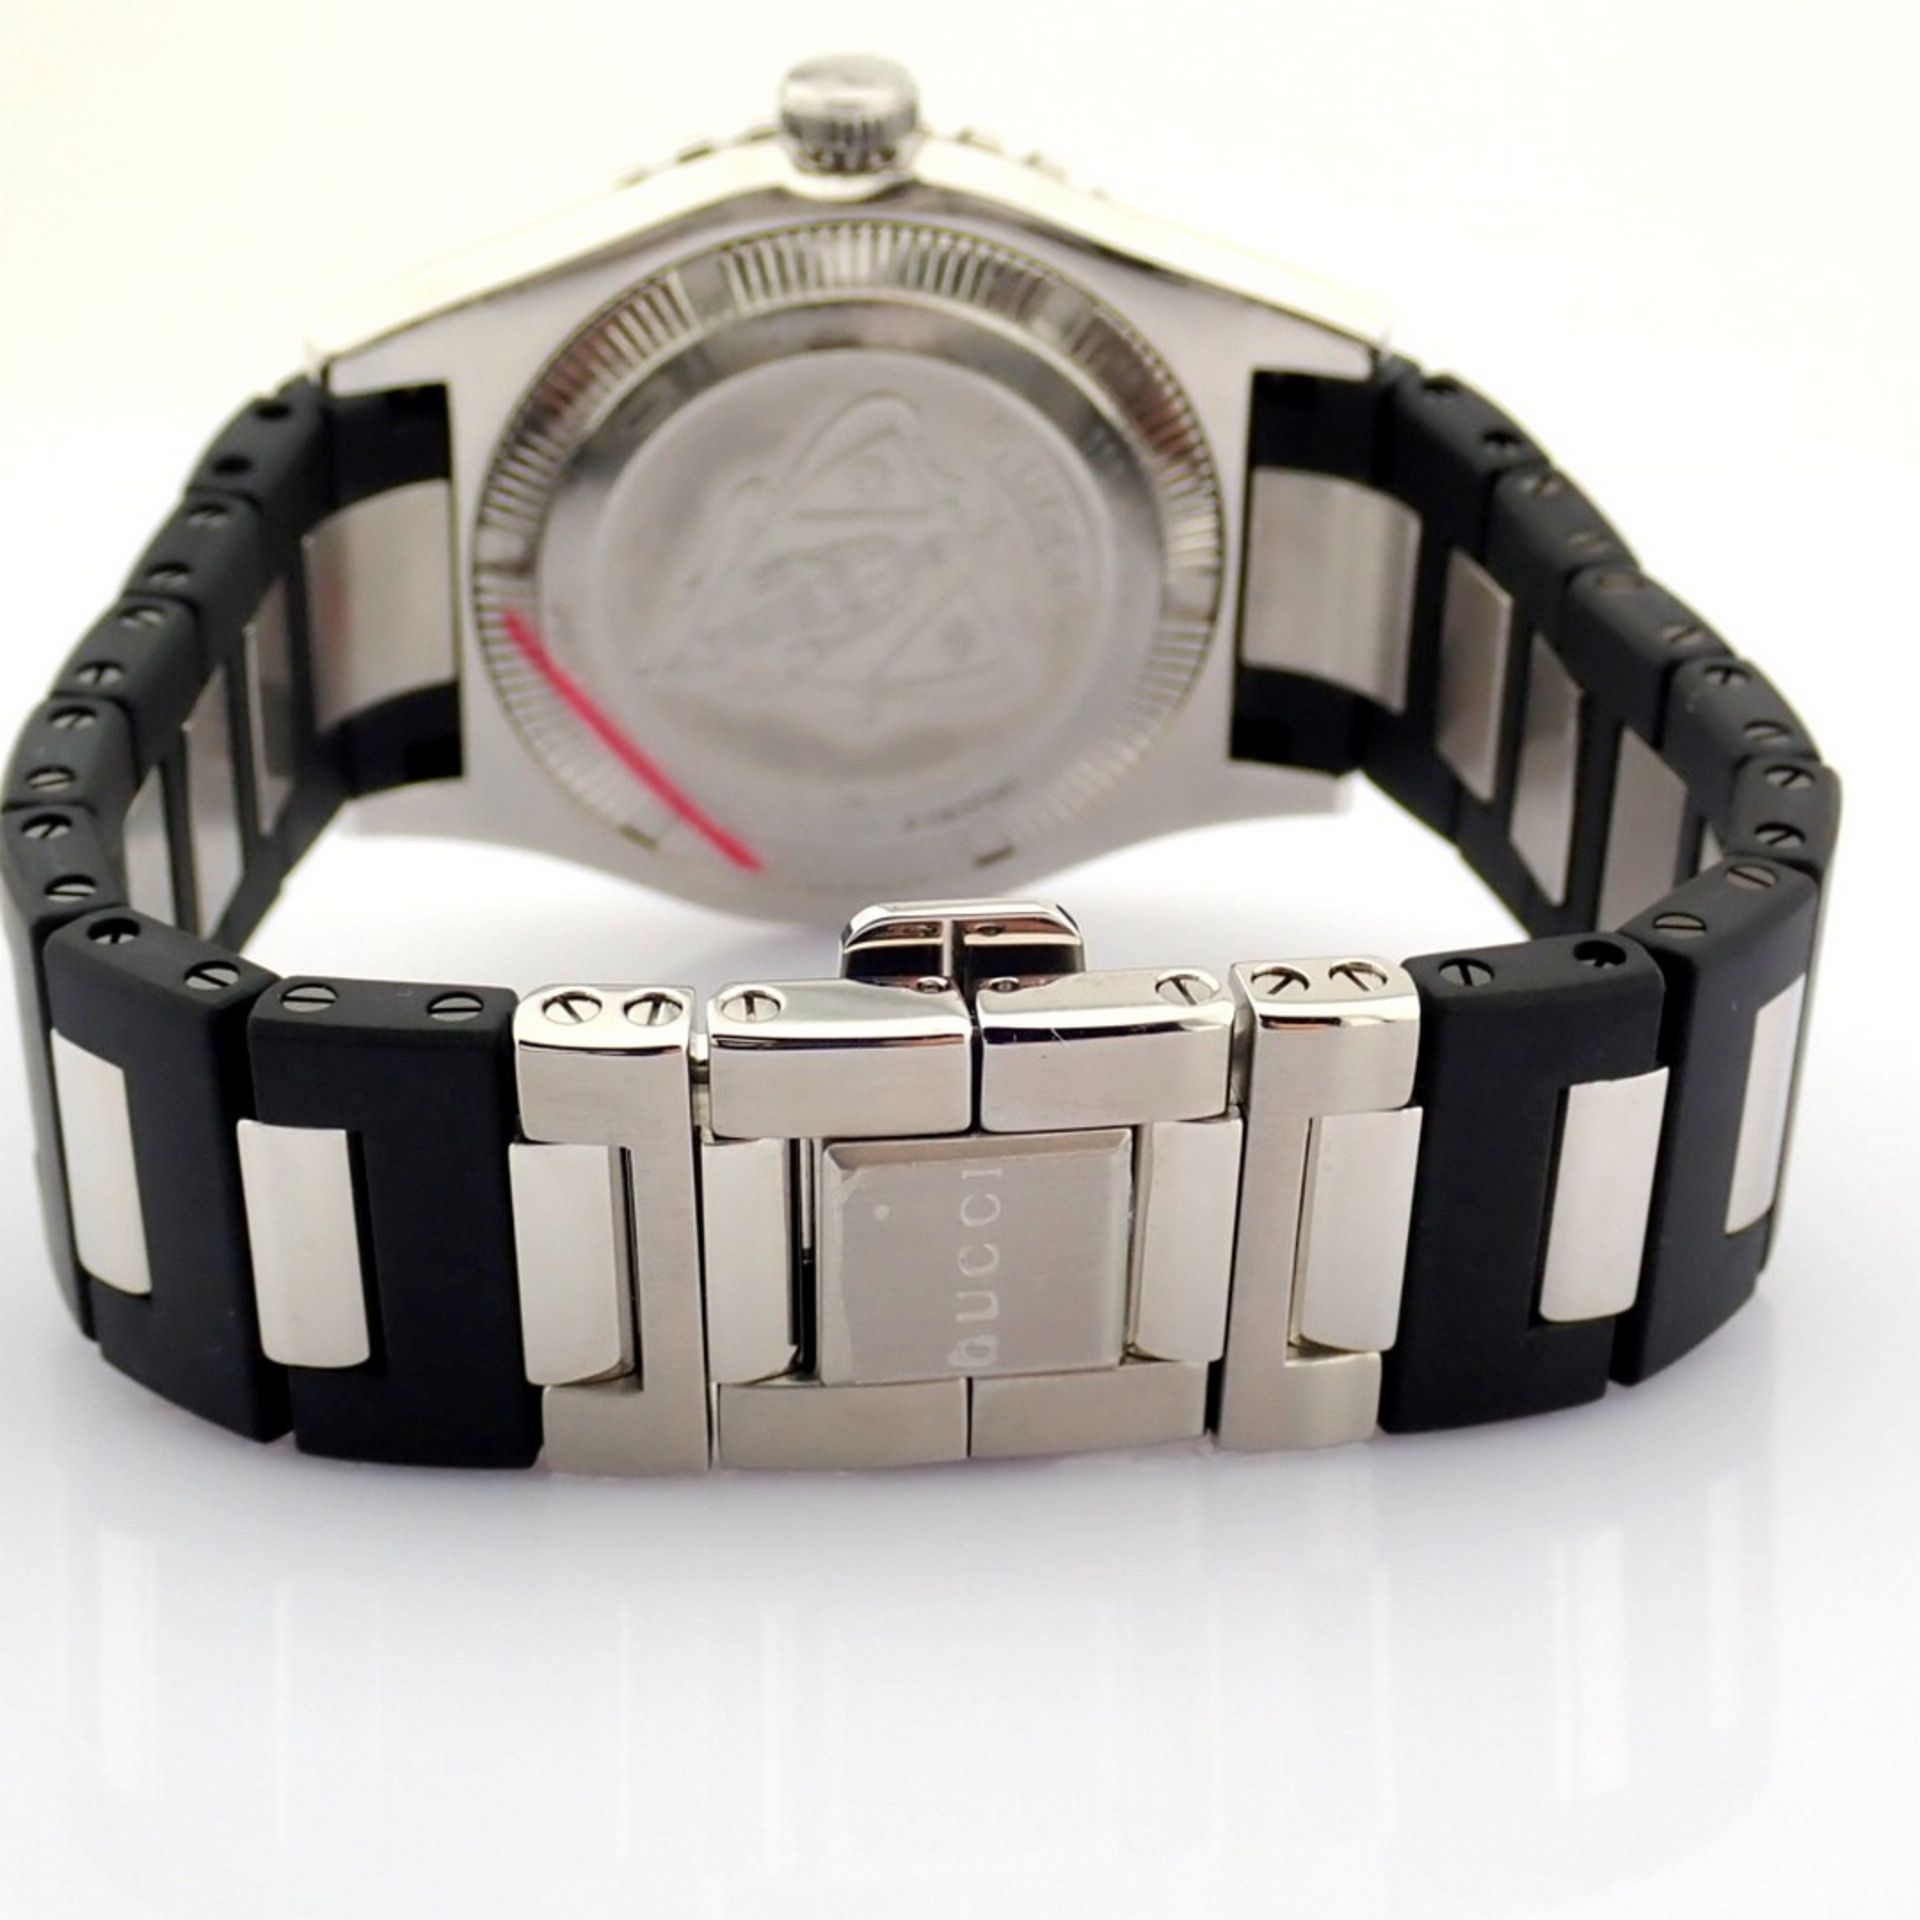 Gucci / Pantheon 115.2 (Brand New) - Gentlmen's Steel Wrist Watch - Image 3 of 13